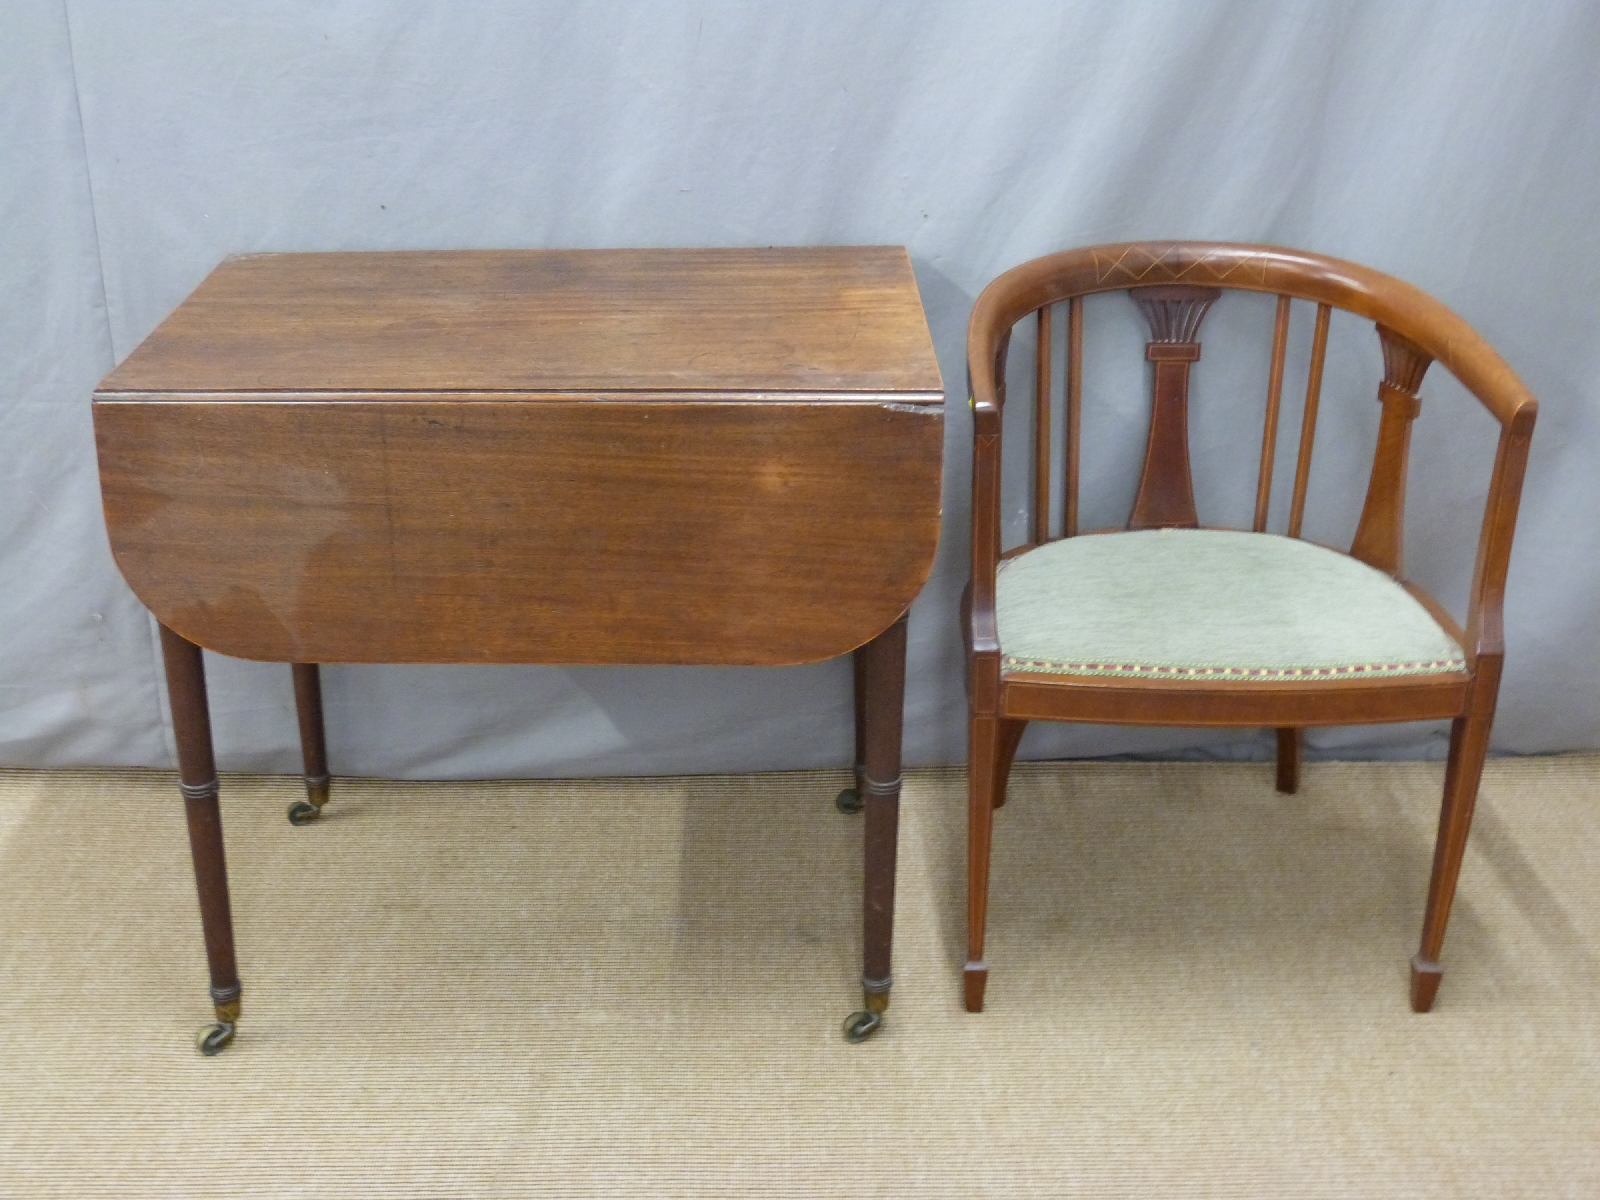 19thC mahogany Pembroke table, length 77cm, and an Edwardian tub chair